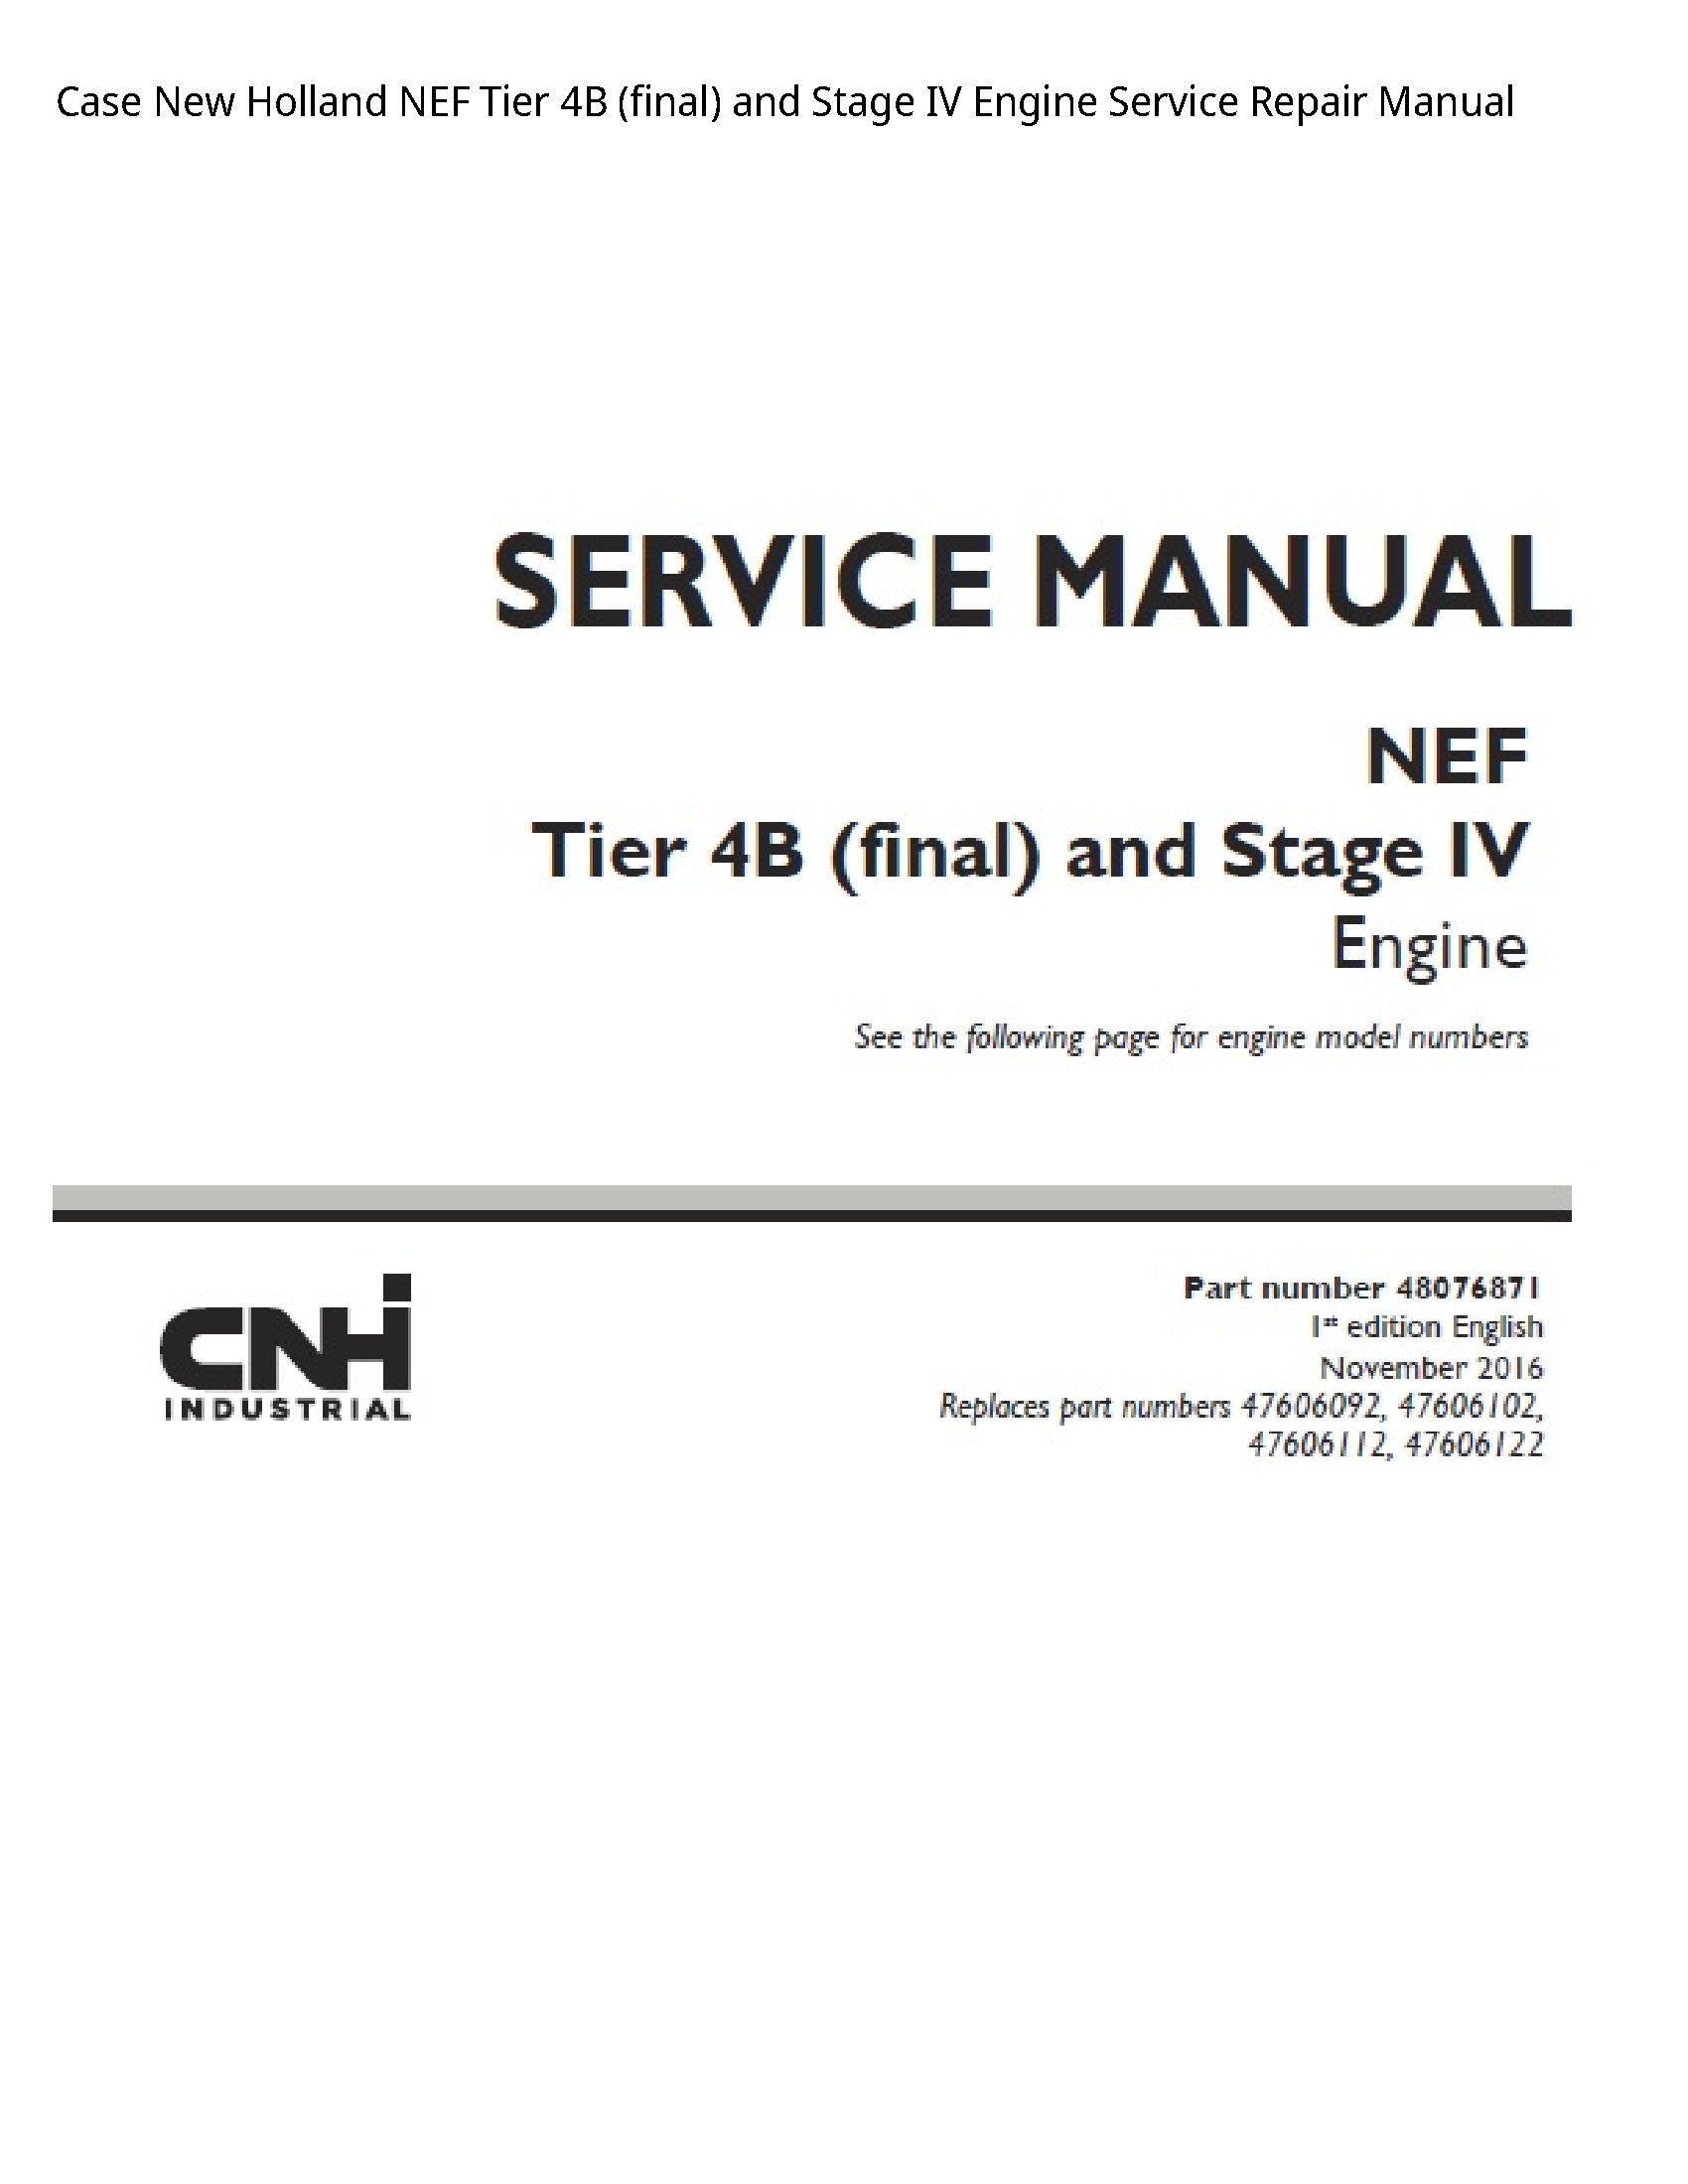 Case/Case IH 4B New Holland NEF Tier (final)  Stage IV Engine manual